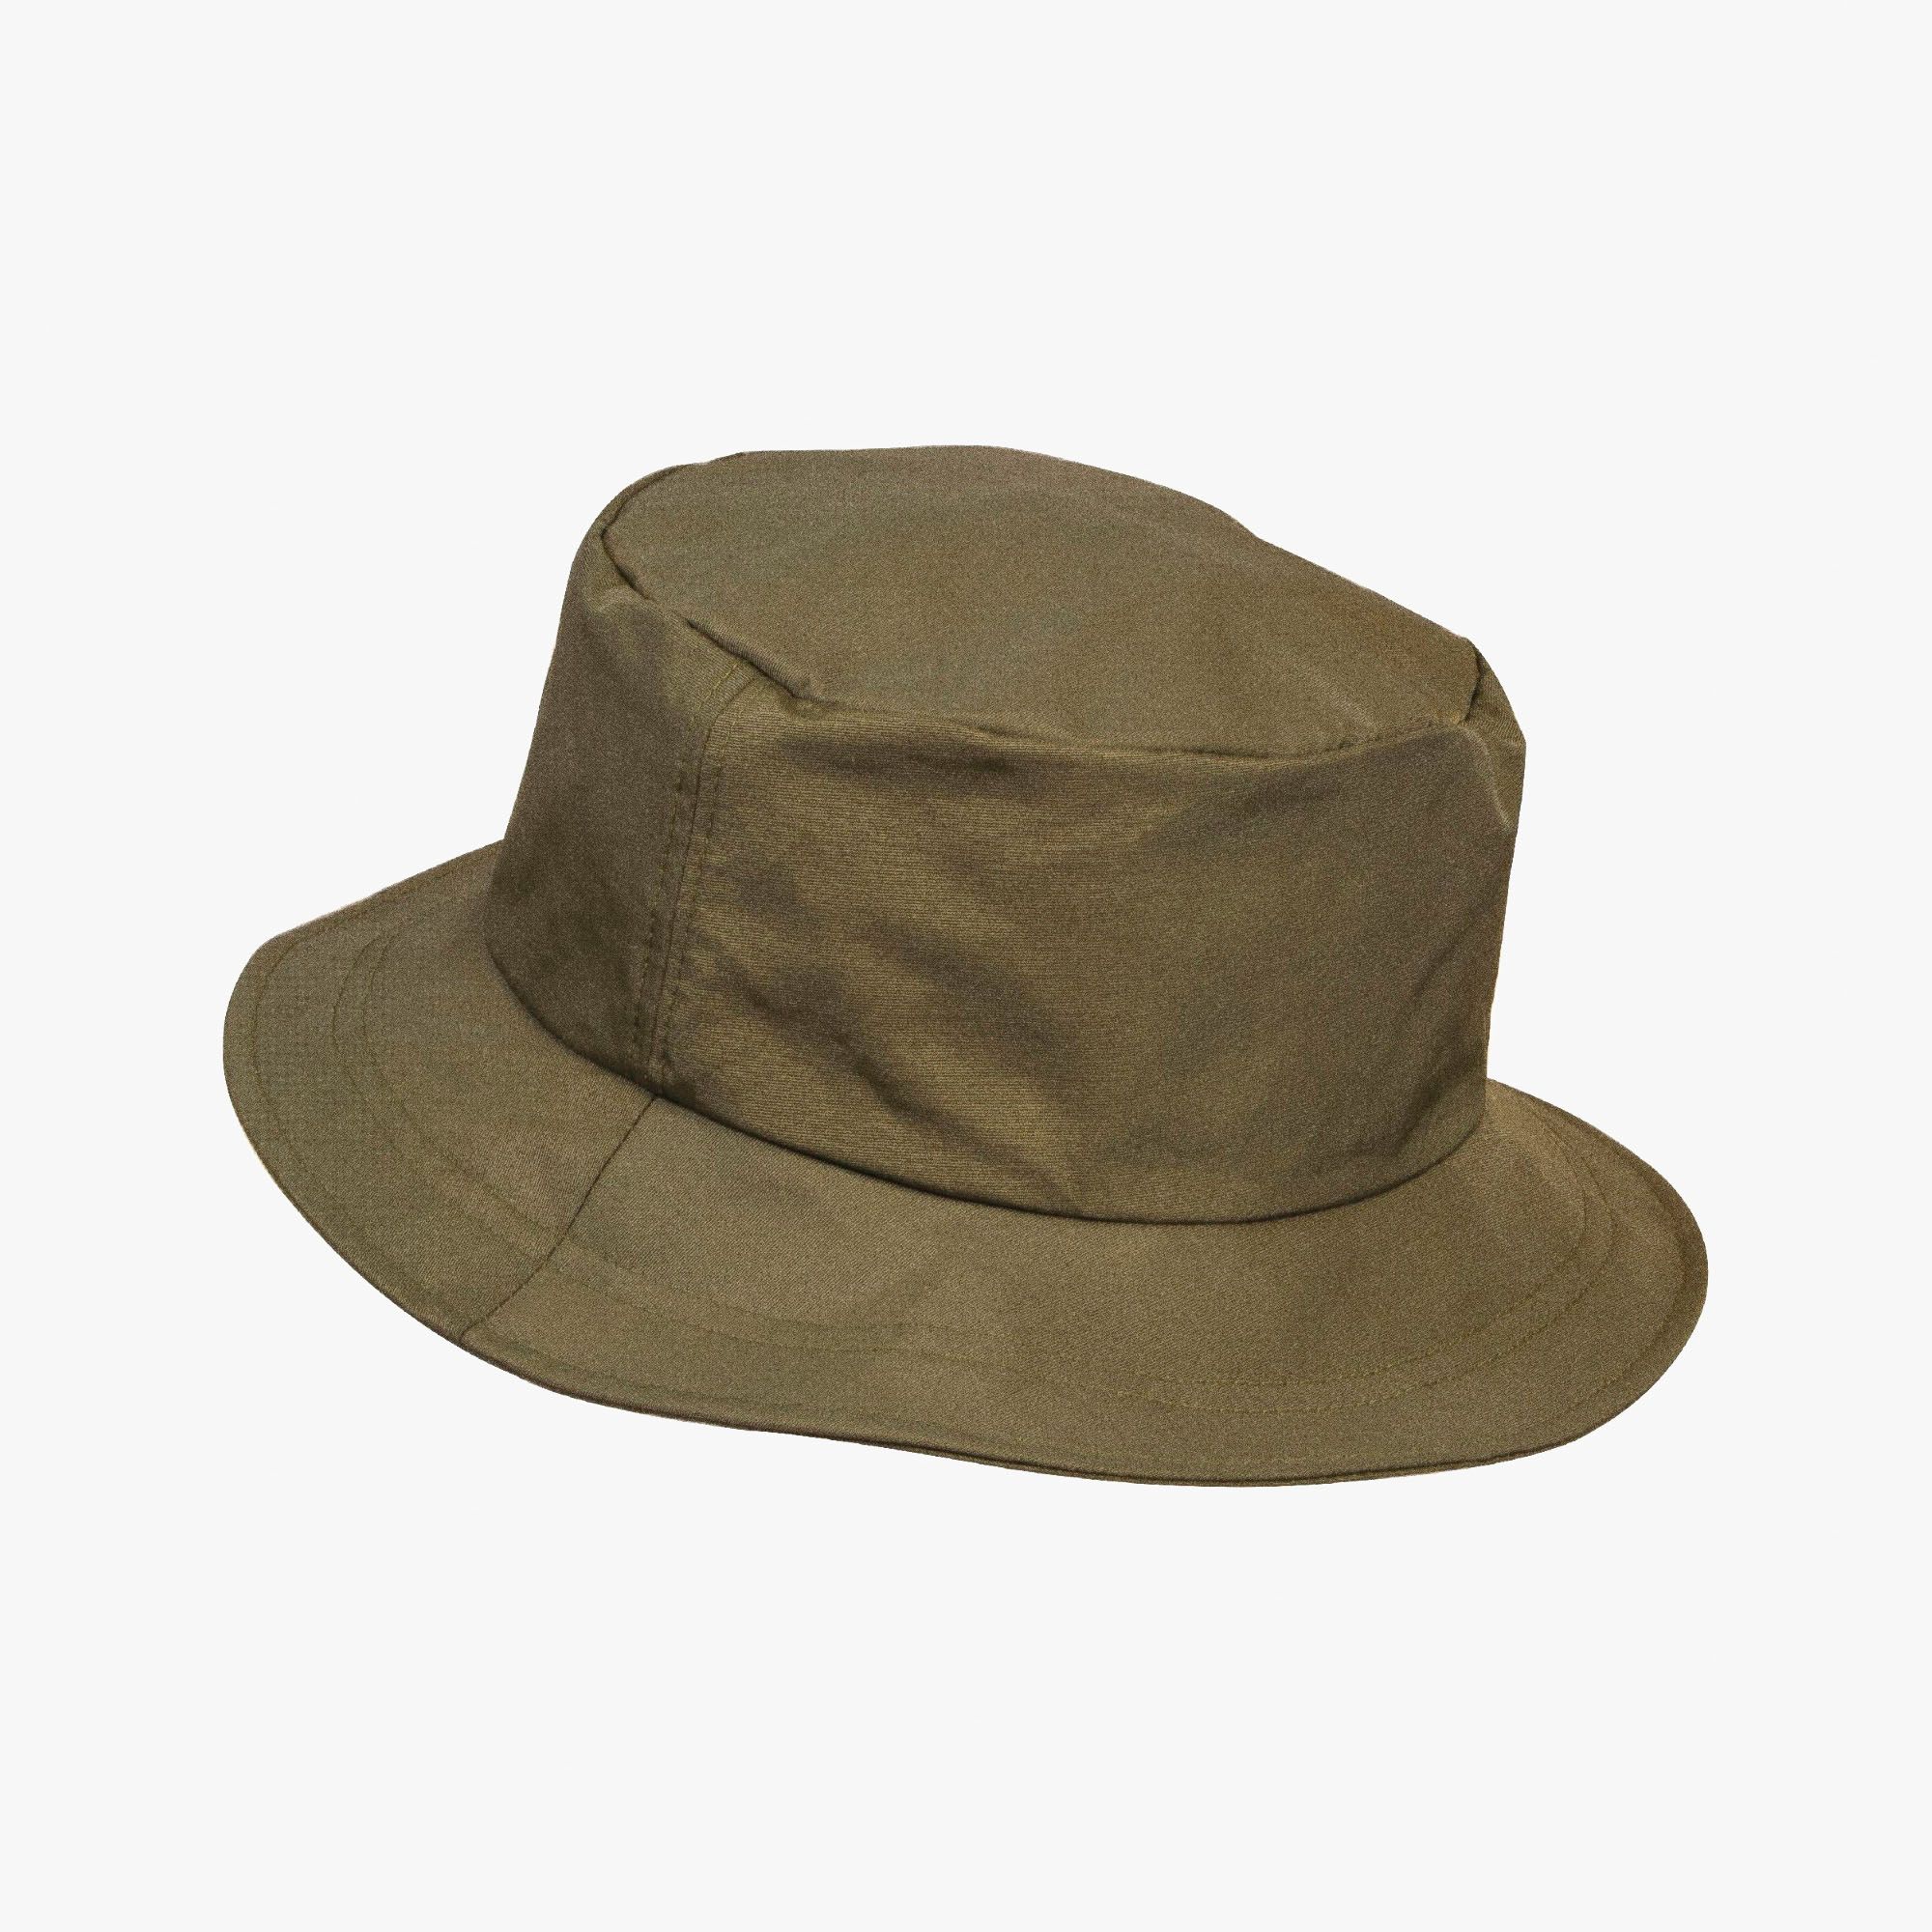 Fold Away Bush Hat: Waterproof & Breathable - The Expert Camper